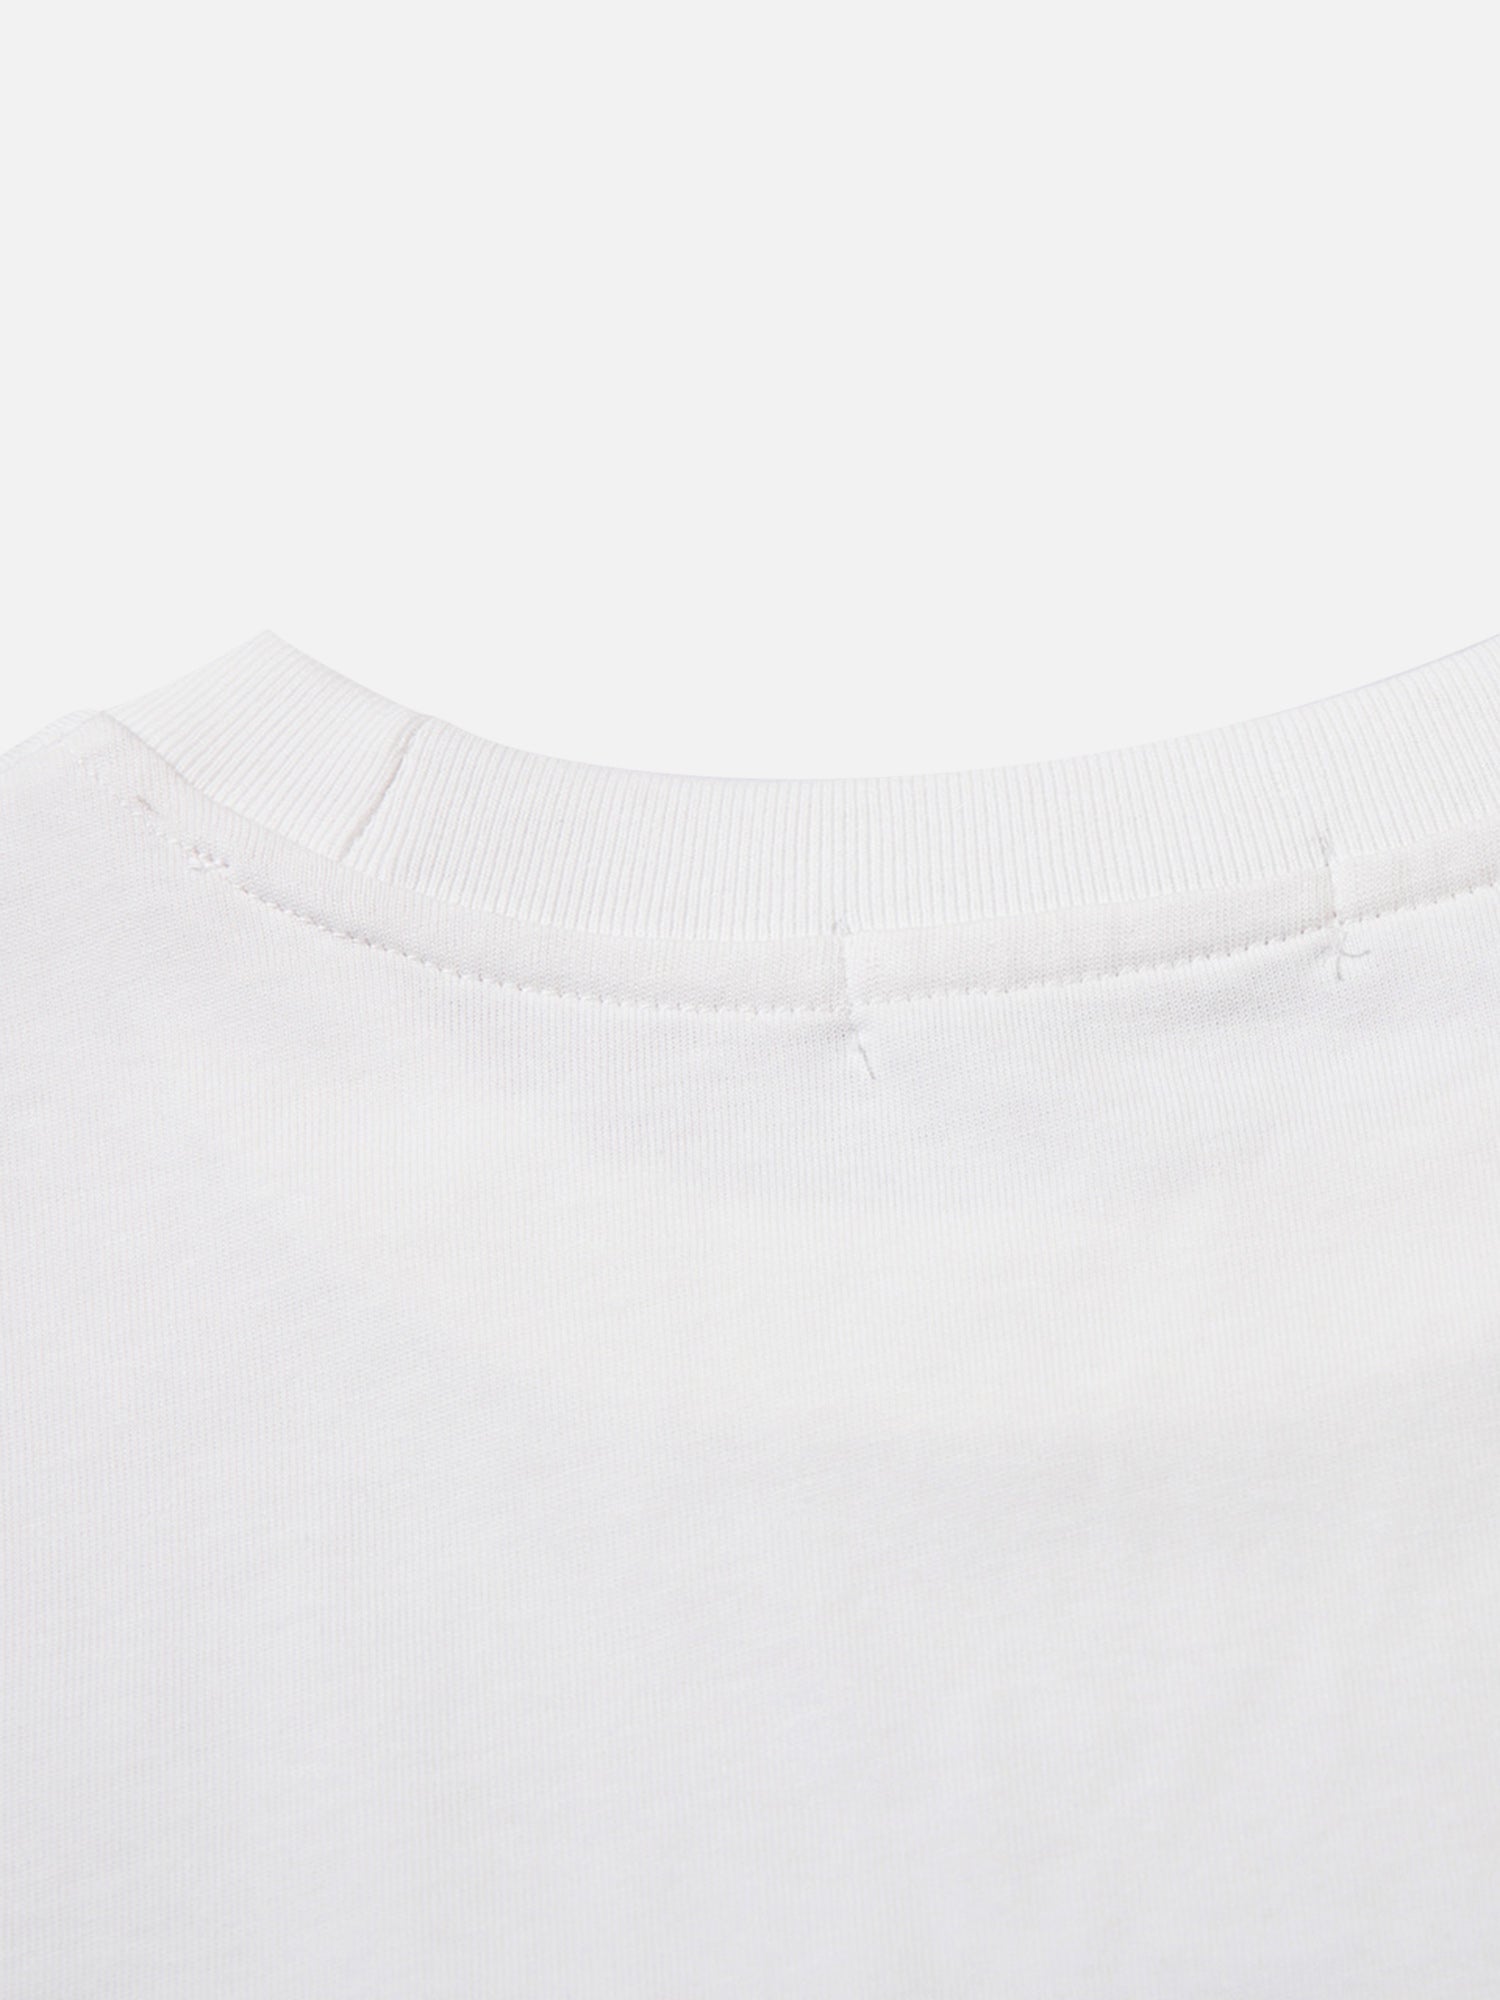 American Fashion Brand Printed Sleeveless Vest